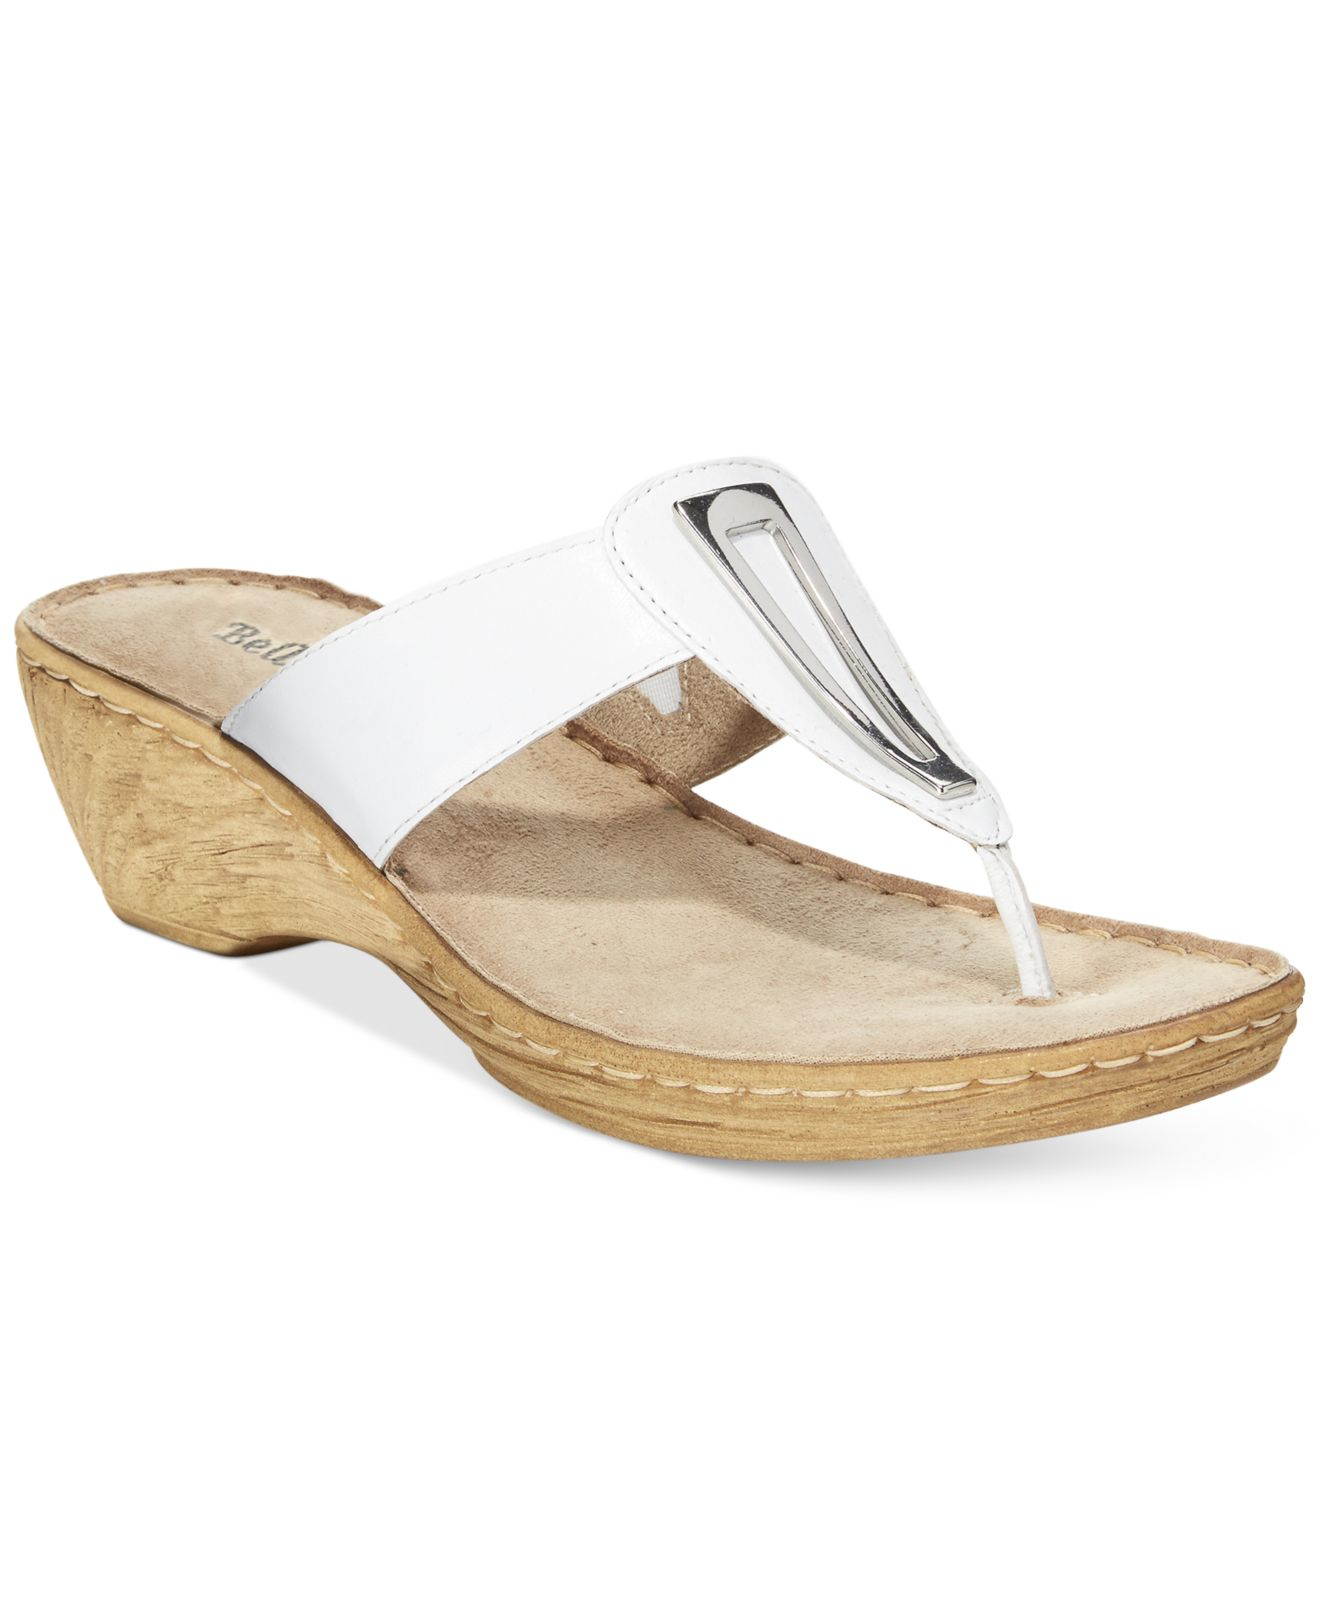 Bella Vita Sulmona T-strap Wedge Sandals in White - Lyst